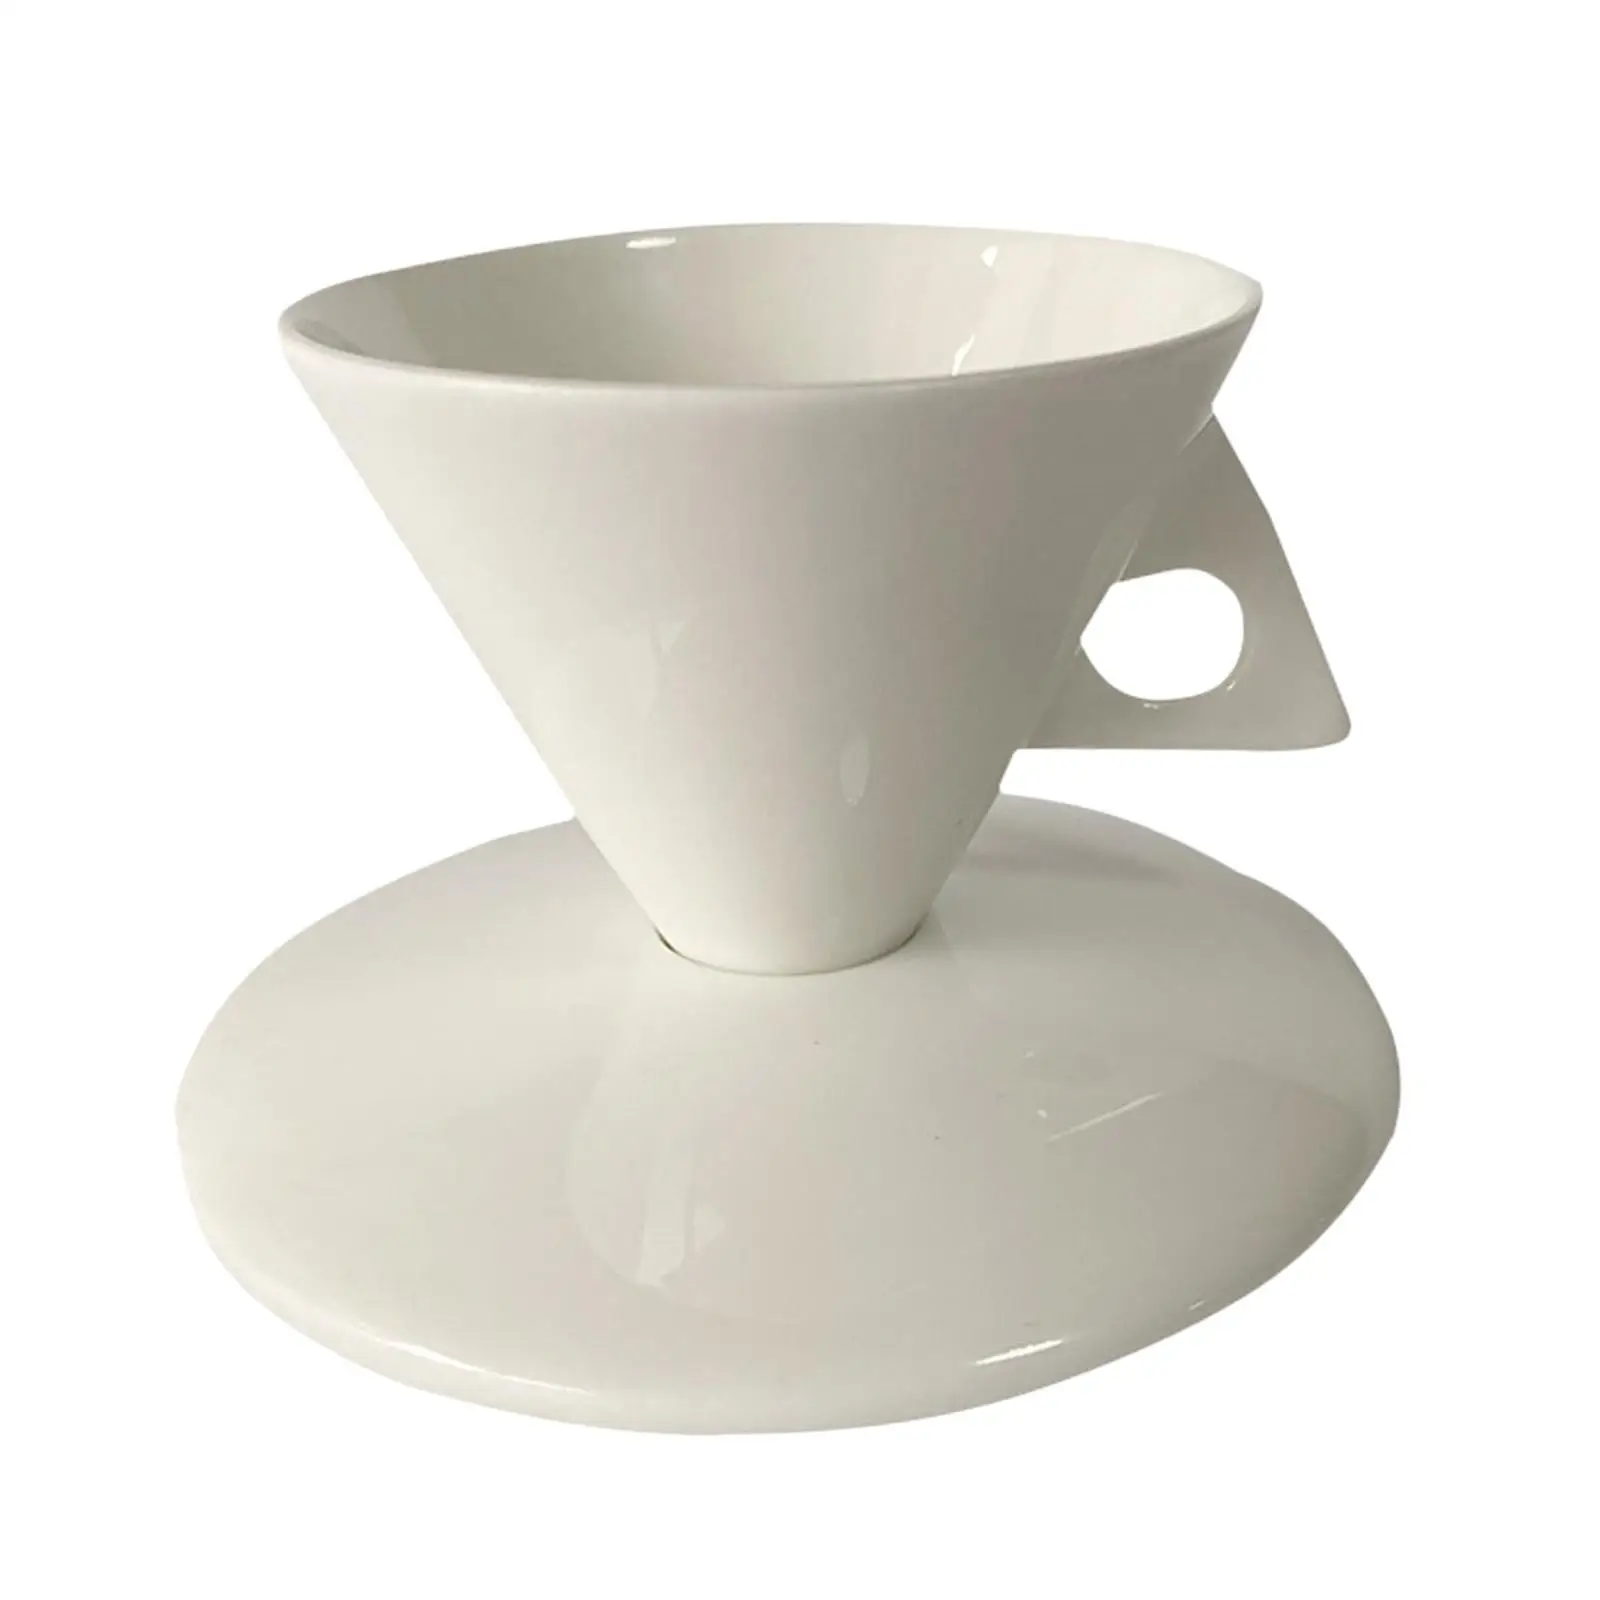 Pyramid Coffee Mug and Saucer Set Teacup Personalized Drinkware 60ml Coffee Cup and Saucer Set for Latte Cappuccino Milk